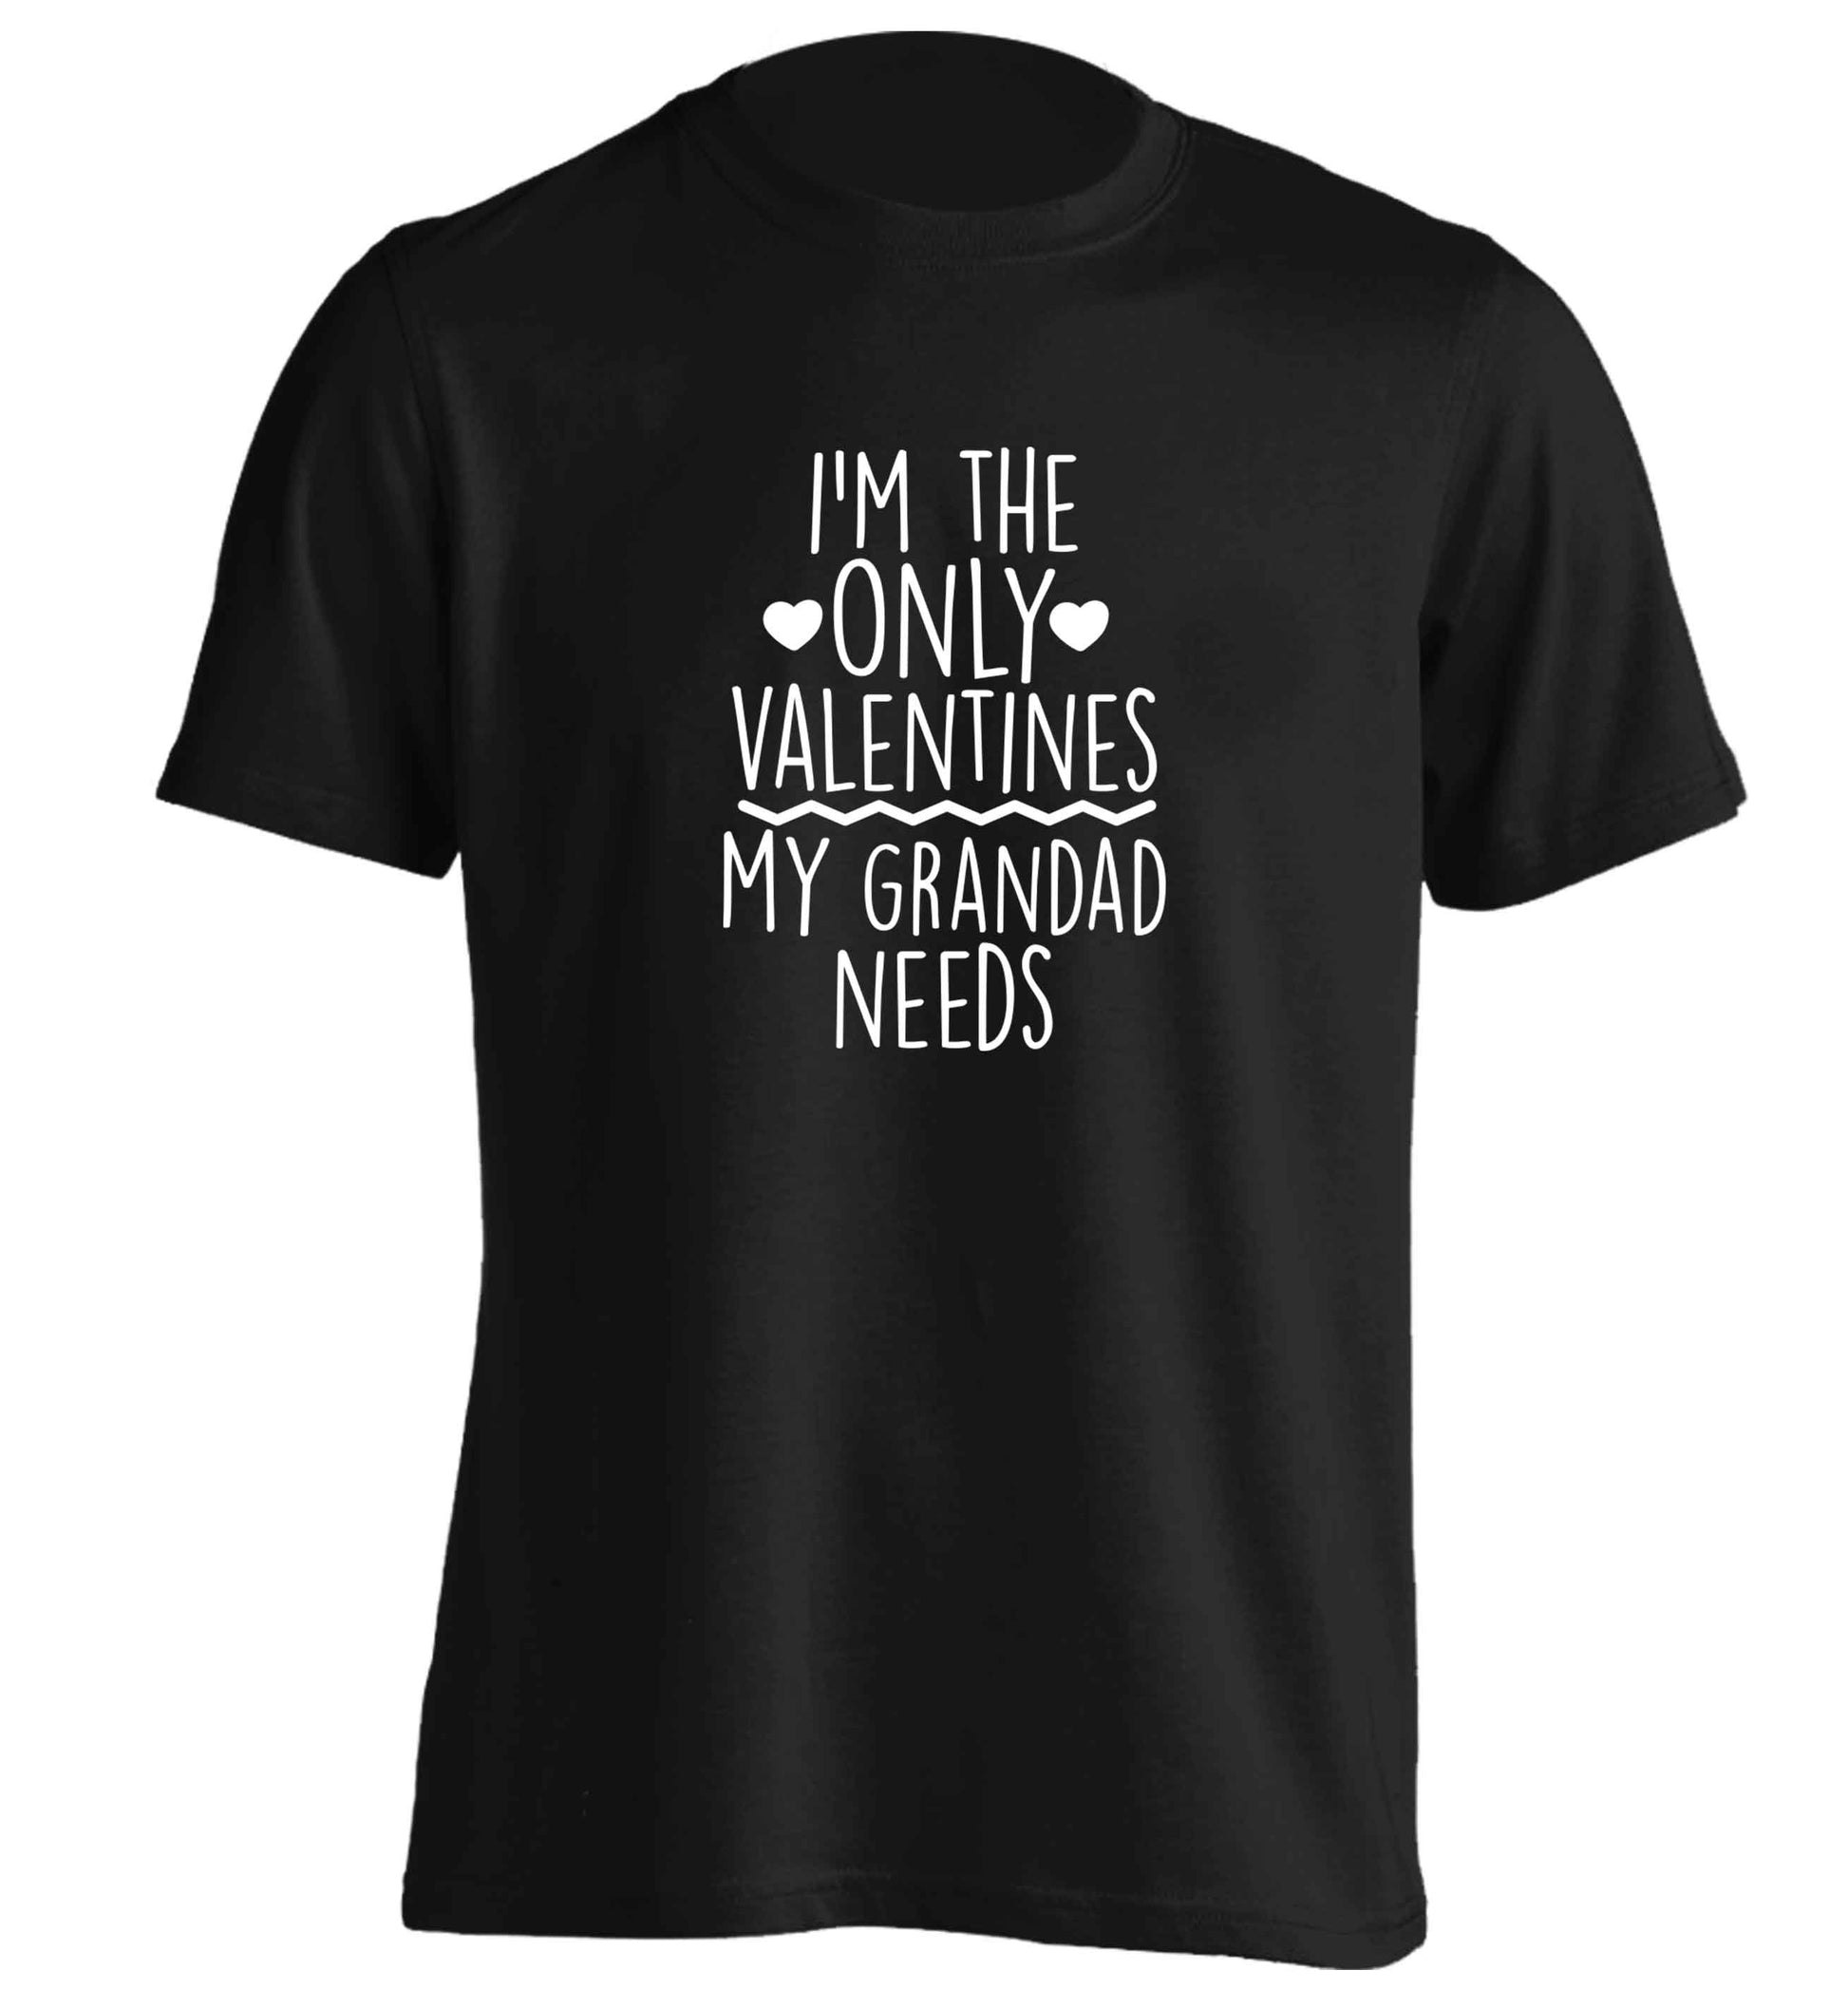 I'm the only valentines my grandad needs adults unisex black Tshirt 2XL